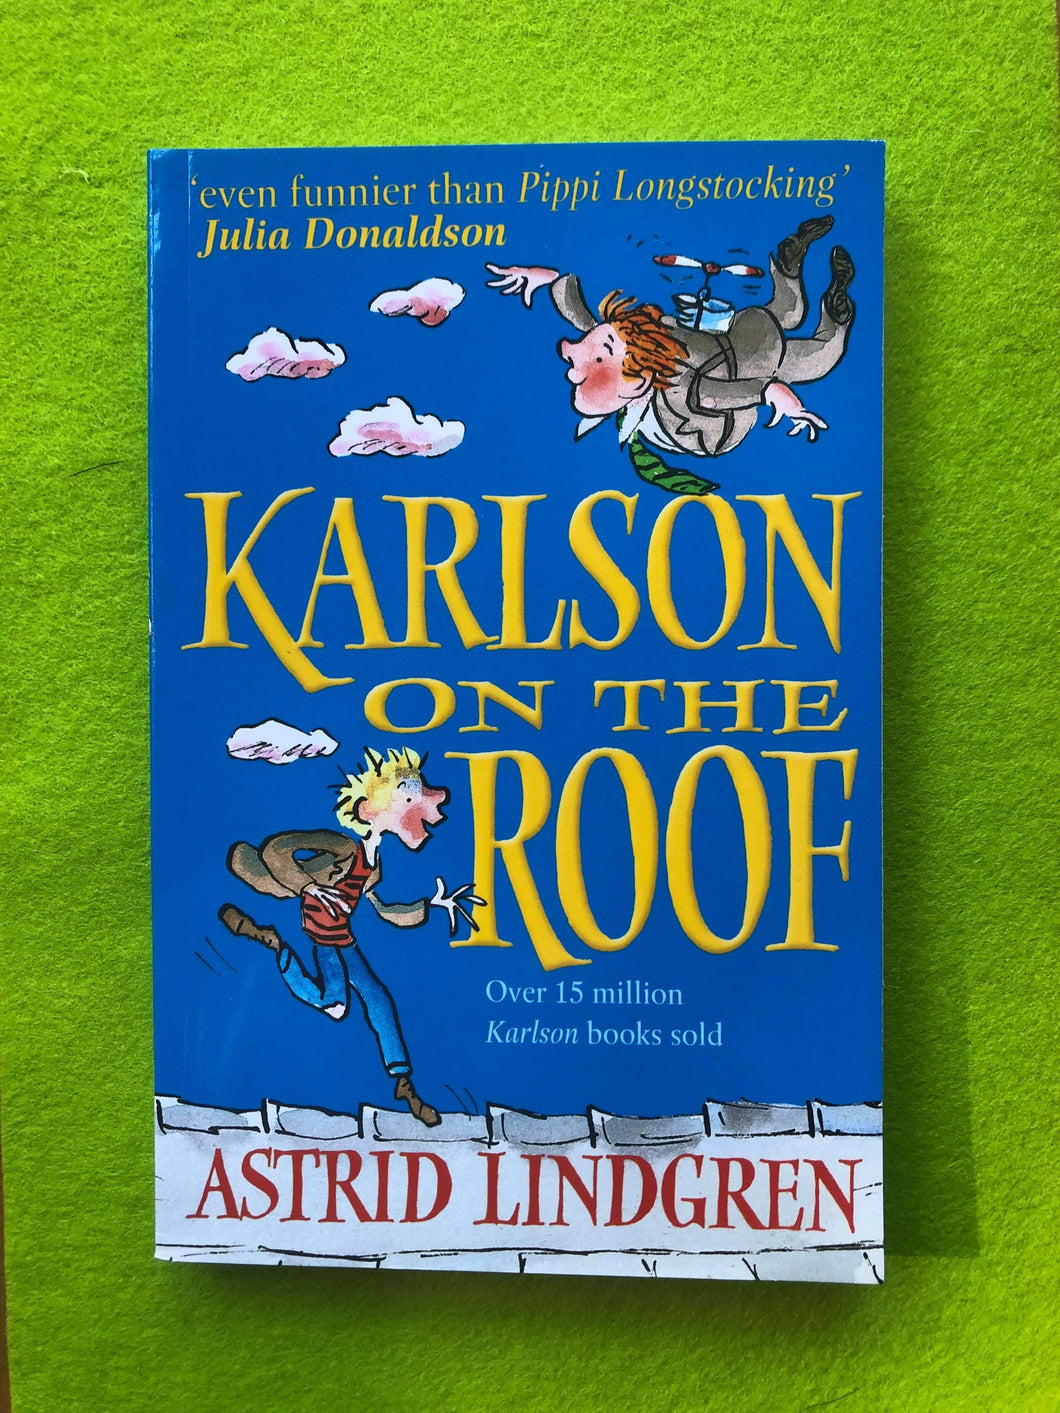 Astrid Lindgren - Karlsson on the Roof